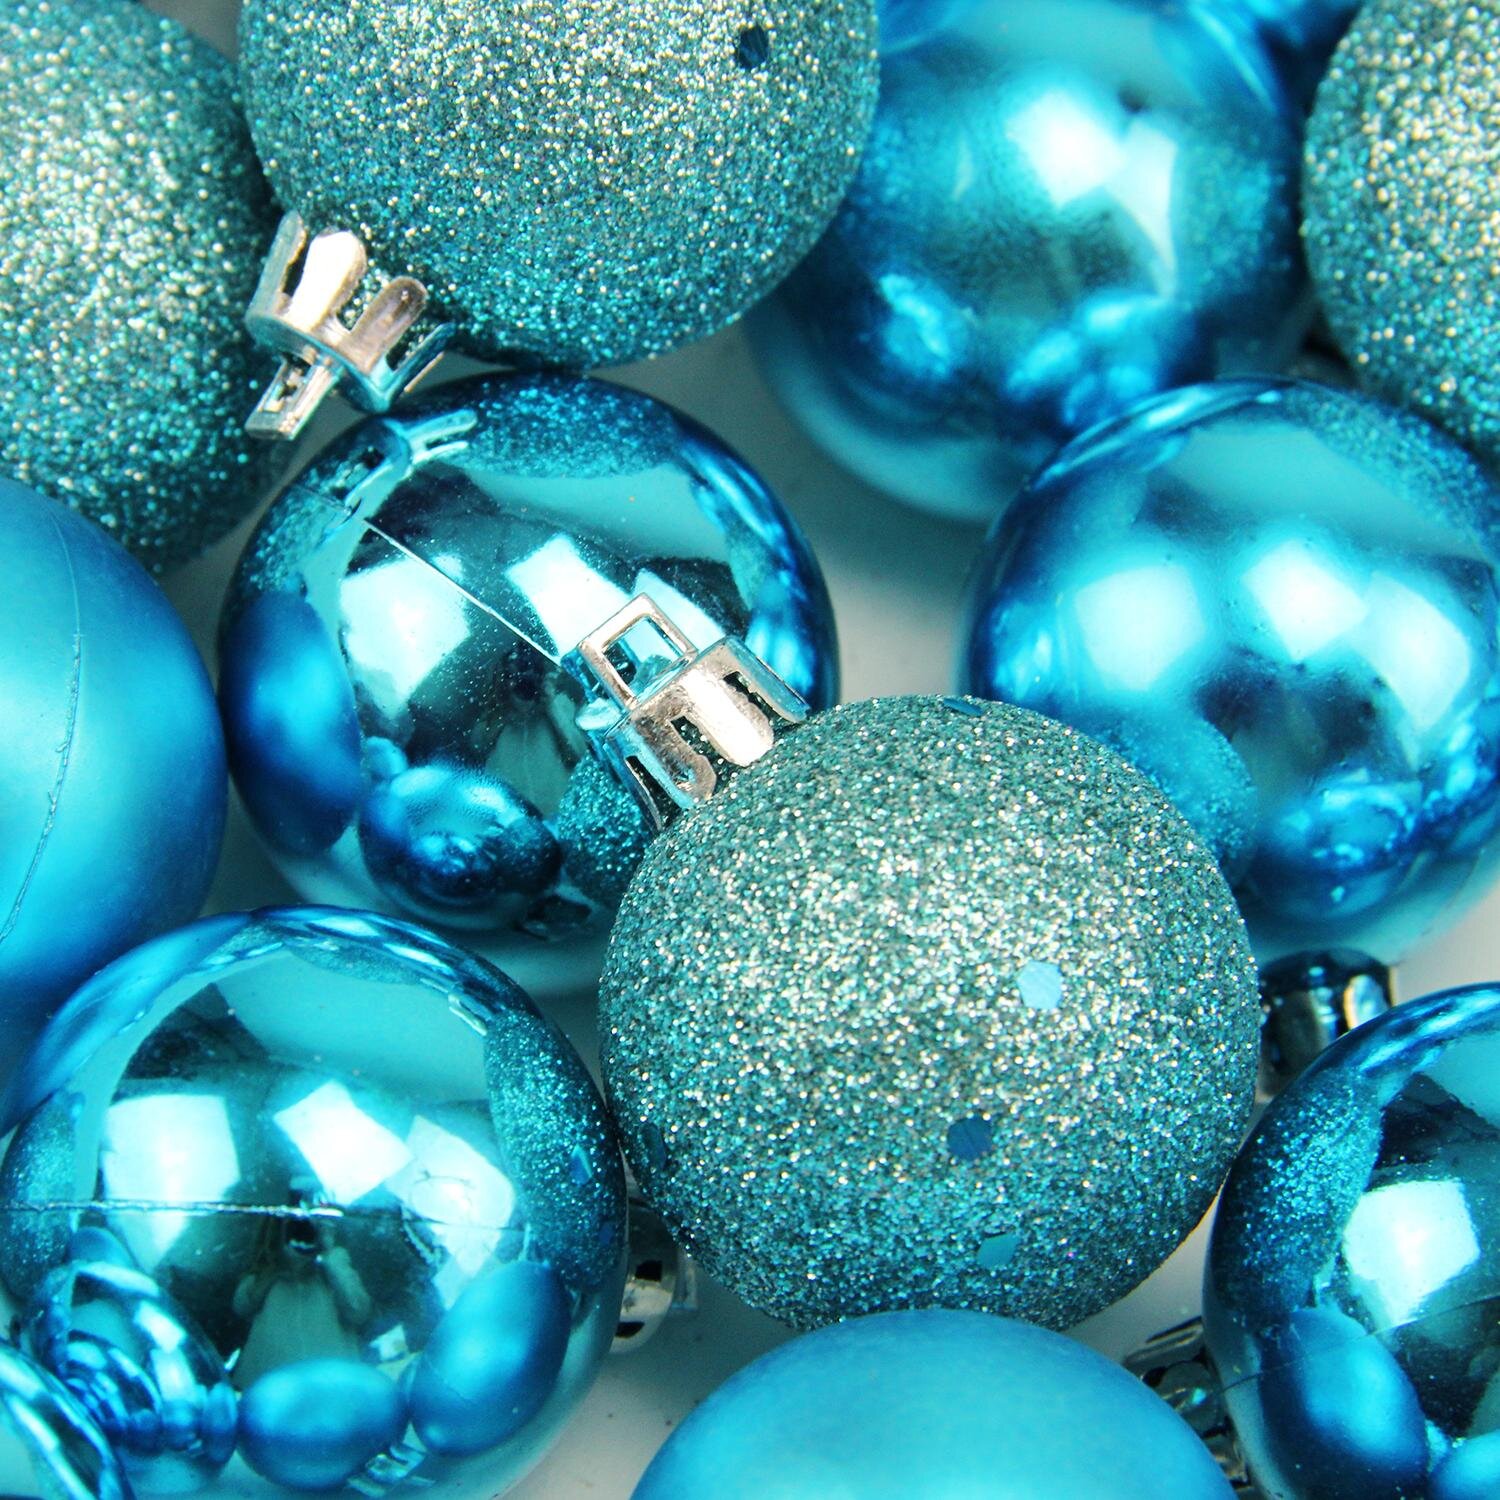 blue christmas balls